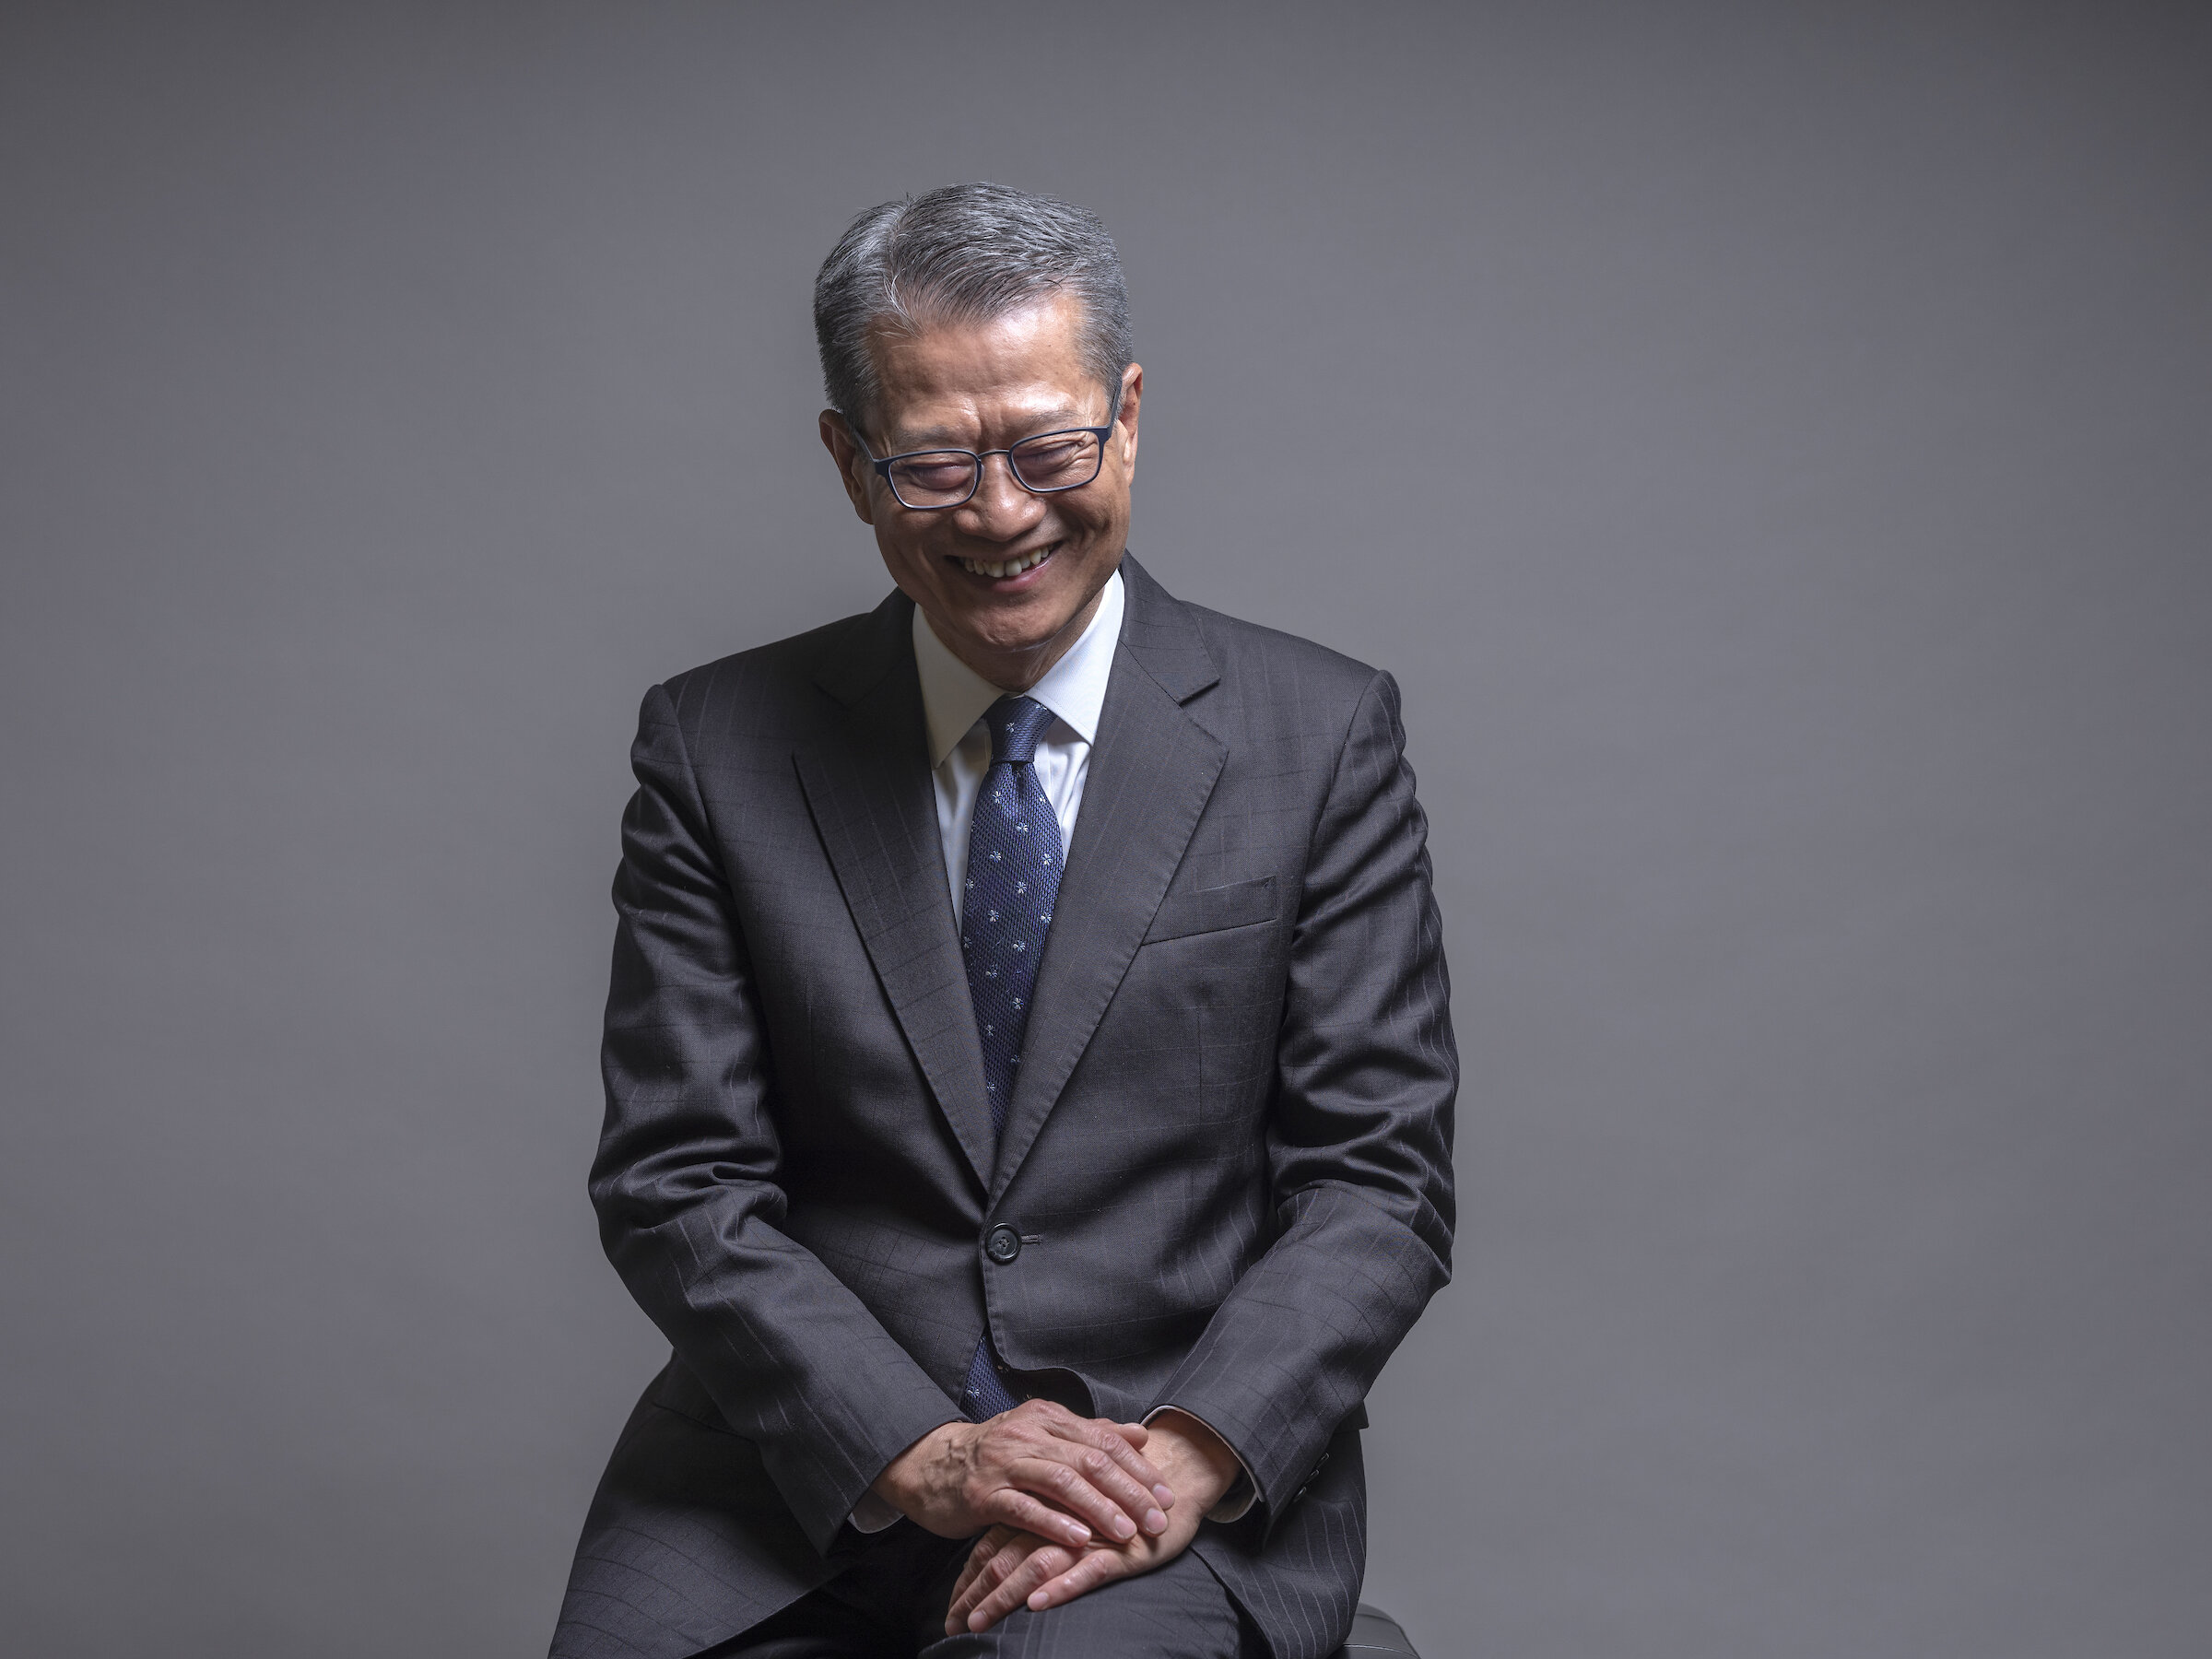   Paul Chan 陳茂波  Hong Kong’s financial secretary 